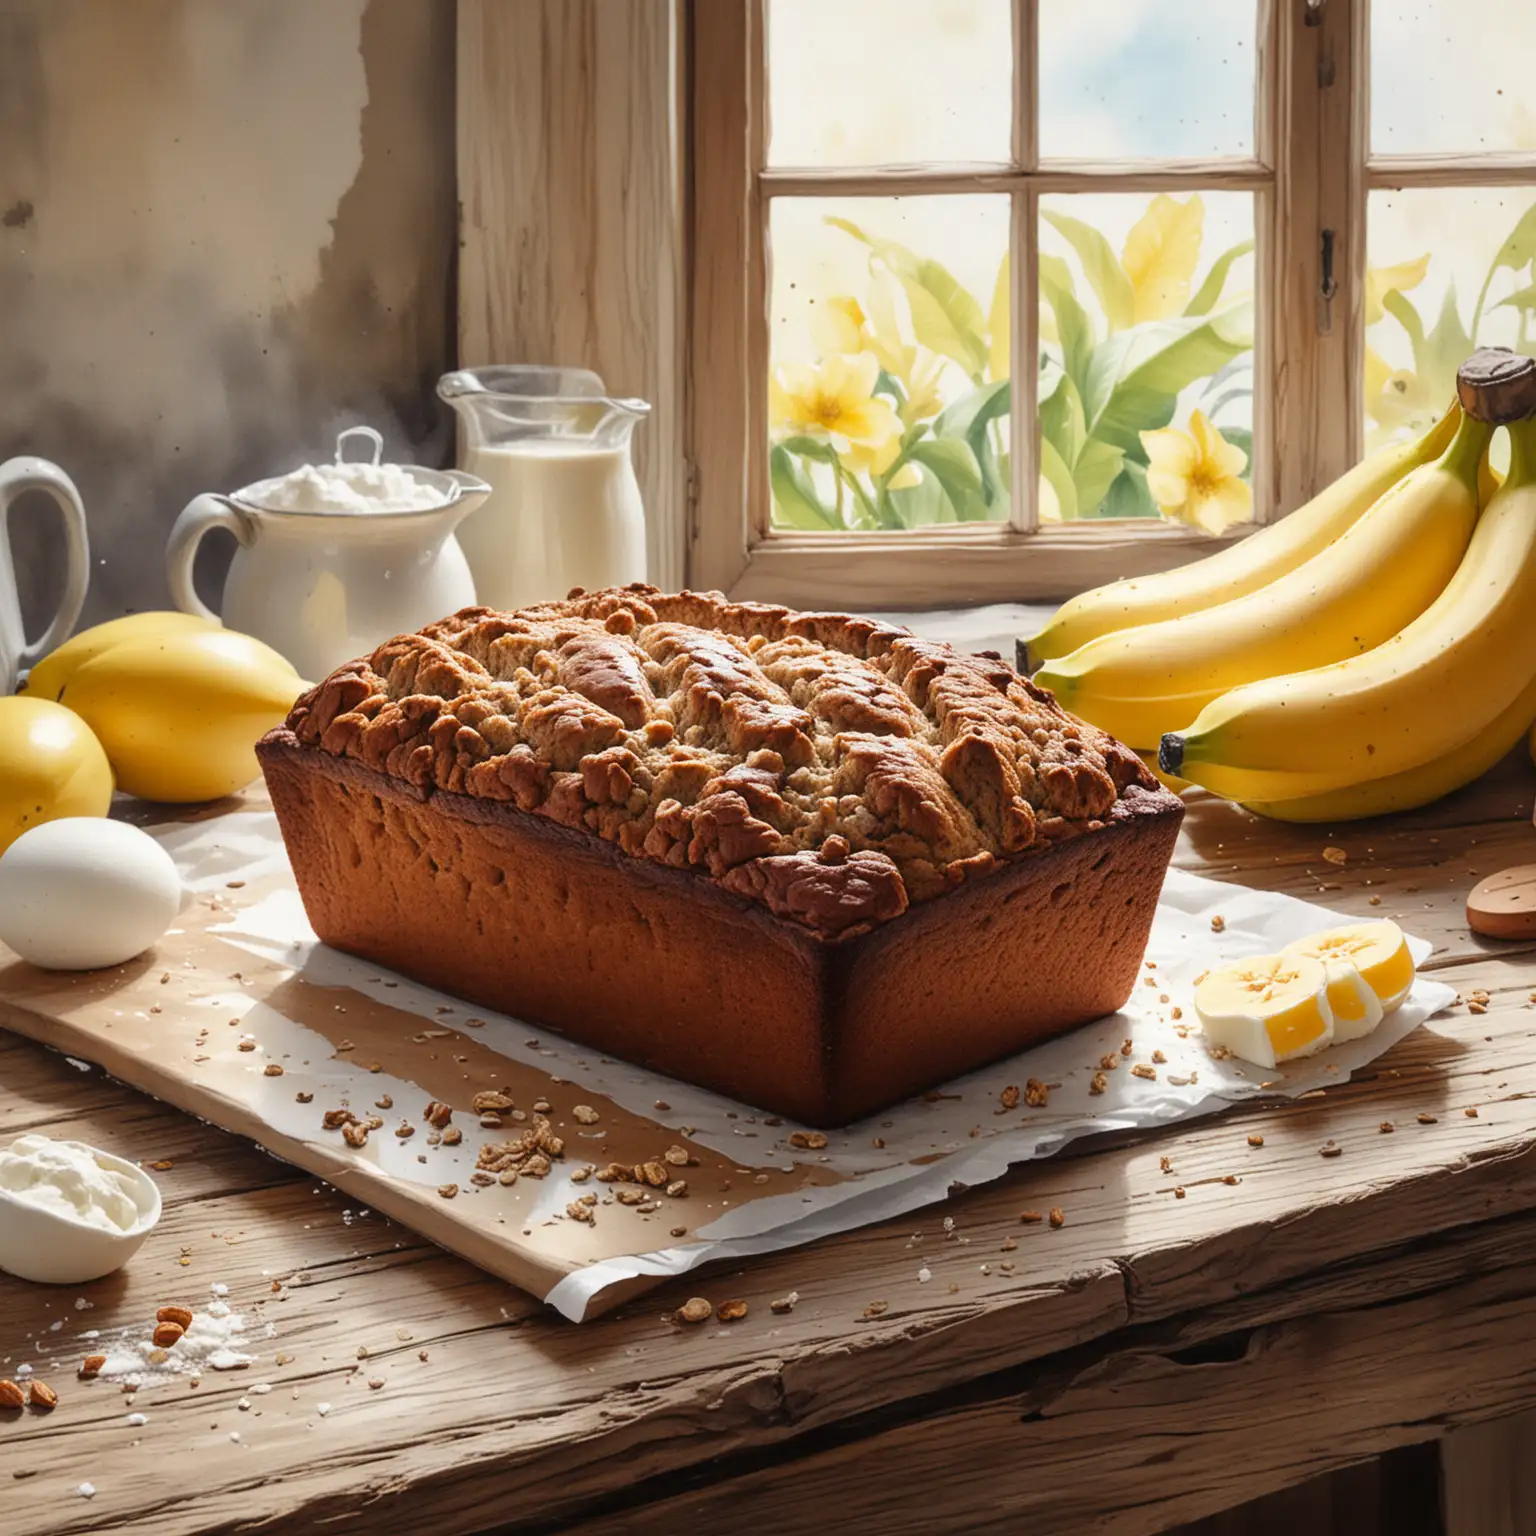 Homemade Banana Bread Recipe Freshly Baked Loaf on Vintage Table